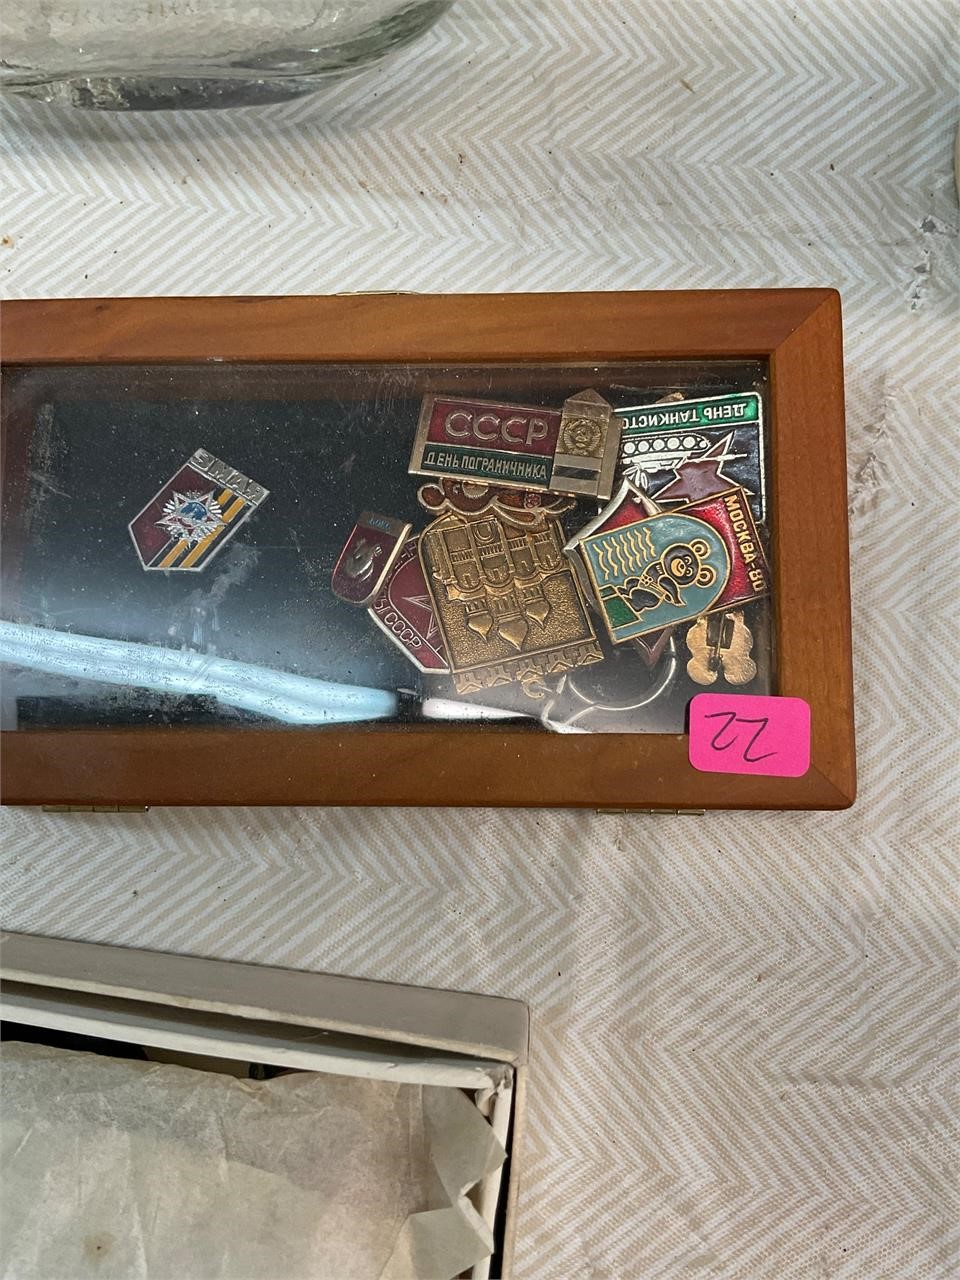 Vintage Communist Pins Lot